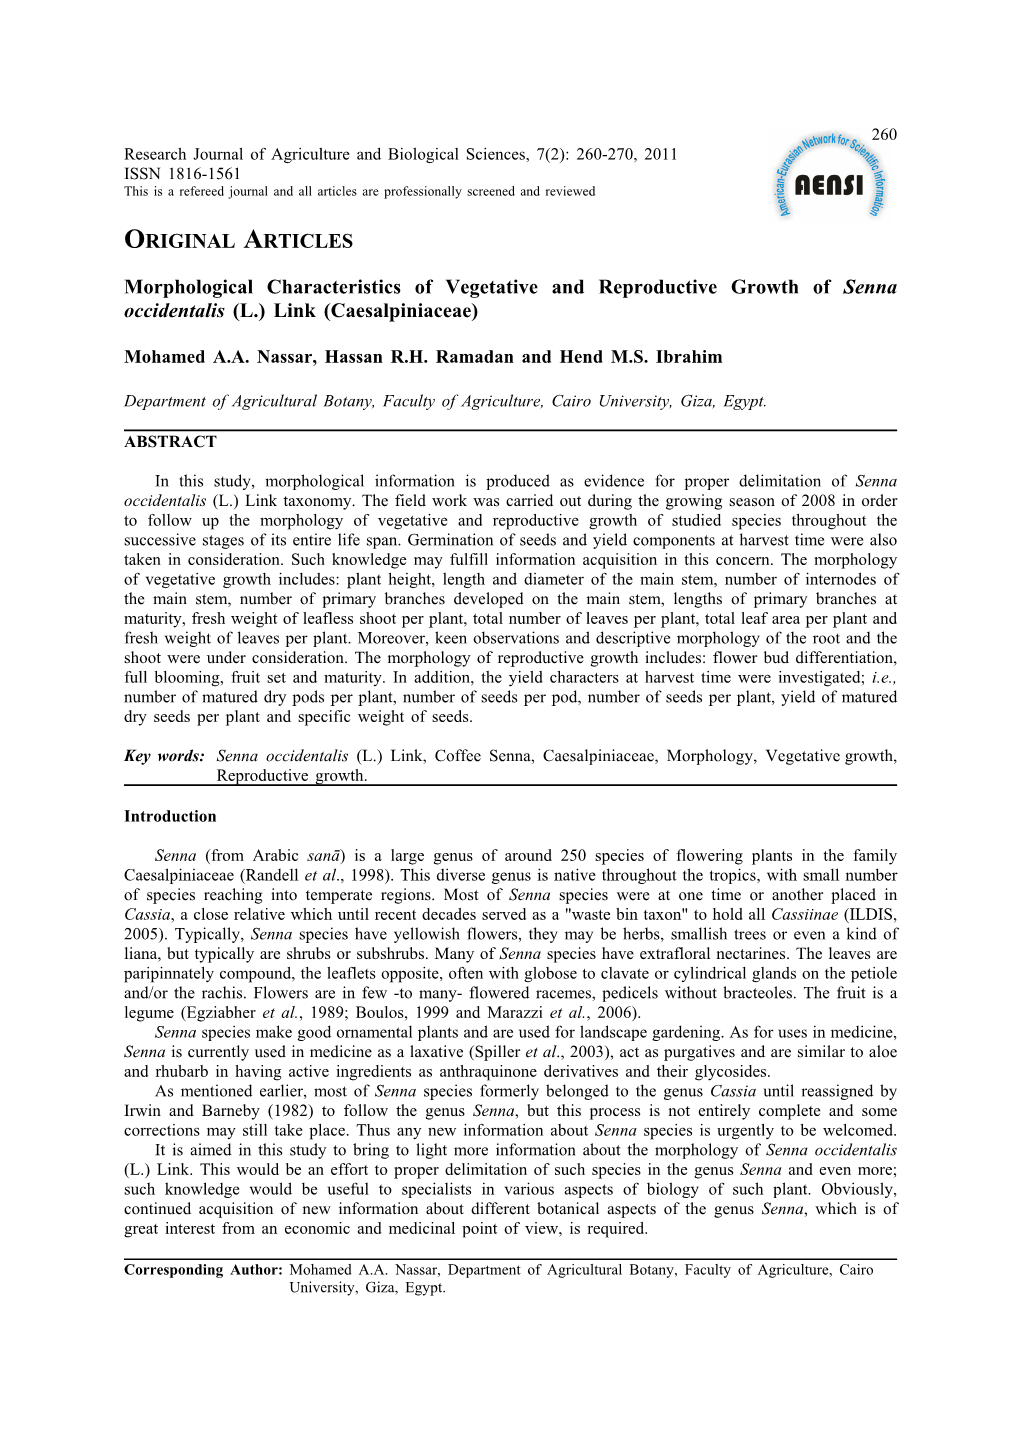 ORIGINAL ARTICLES Morphological Characteristics of Vegetative and Reproductive Growth of Senna Occidentalis (L.) Link (Caesalpin